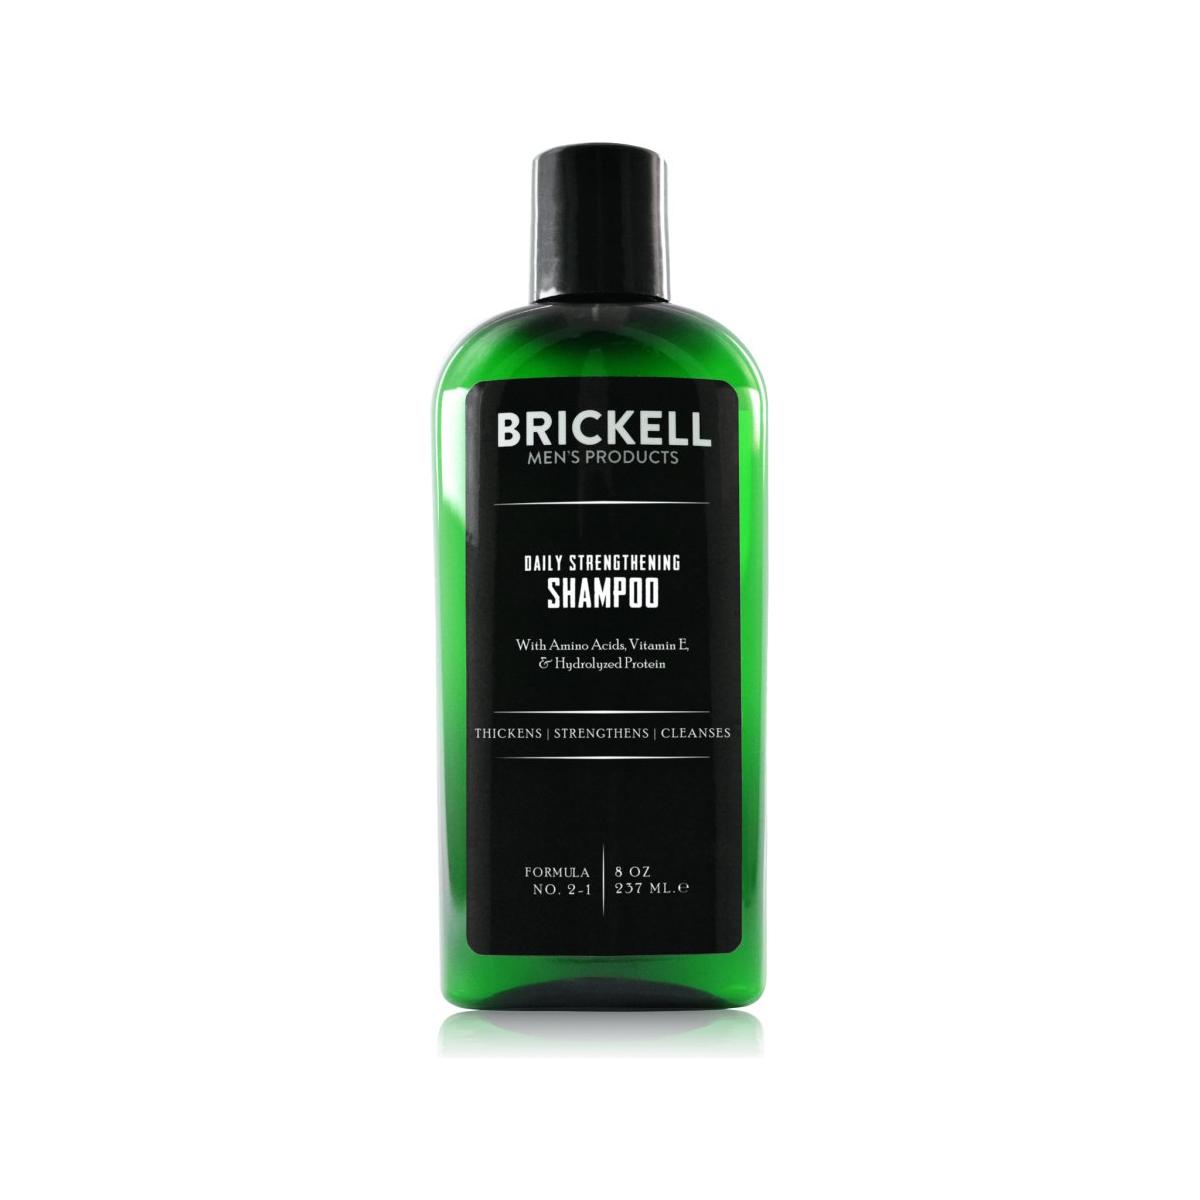 Brickell Daily Strengthening Shampoo - 237ml - Glam Global UK